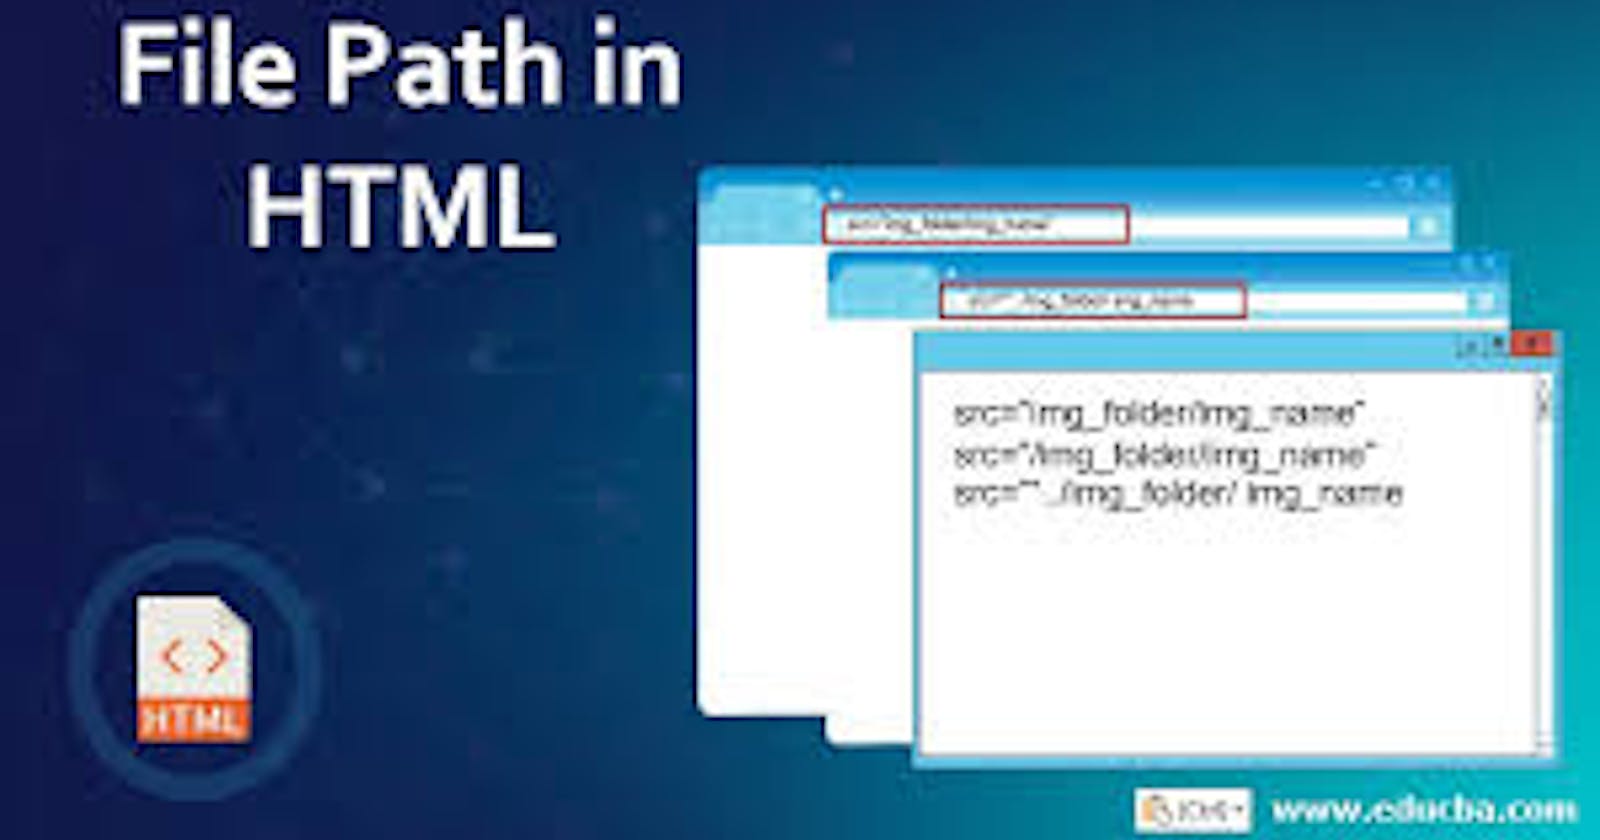 HTML File paths